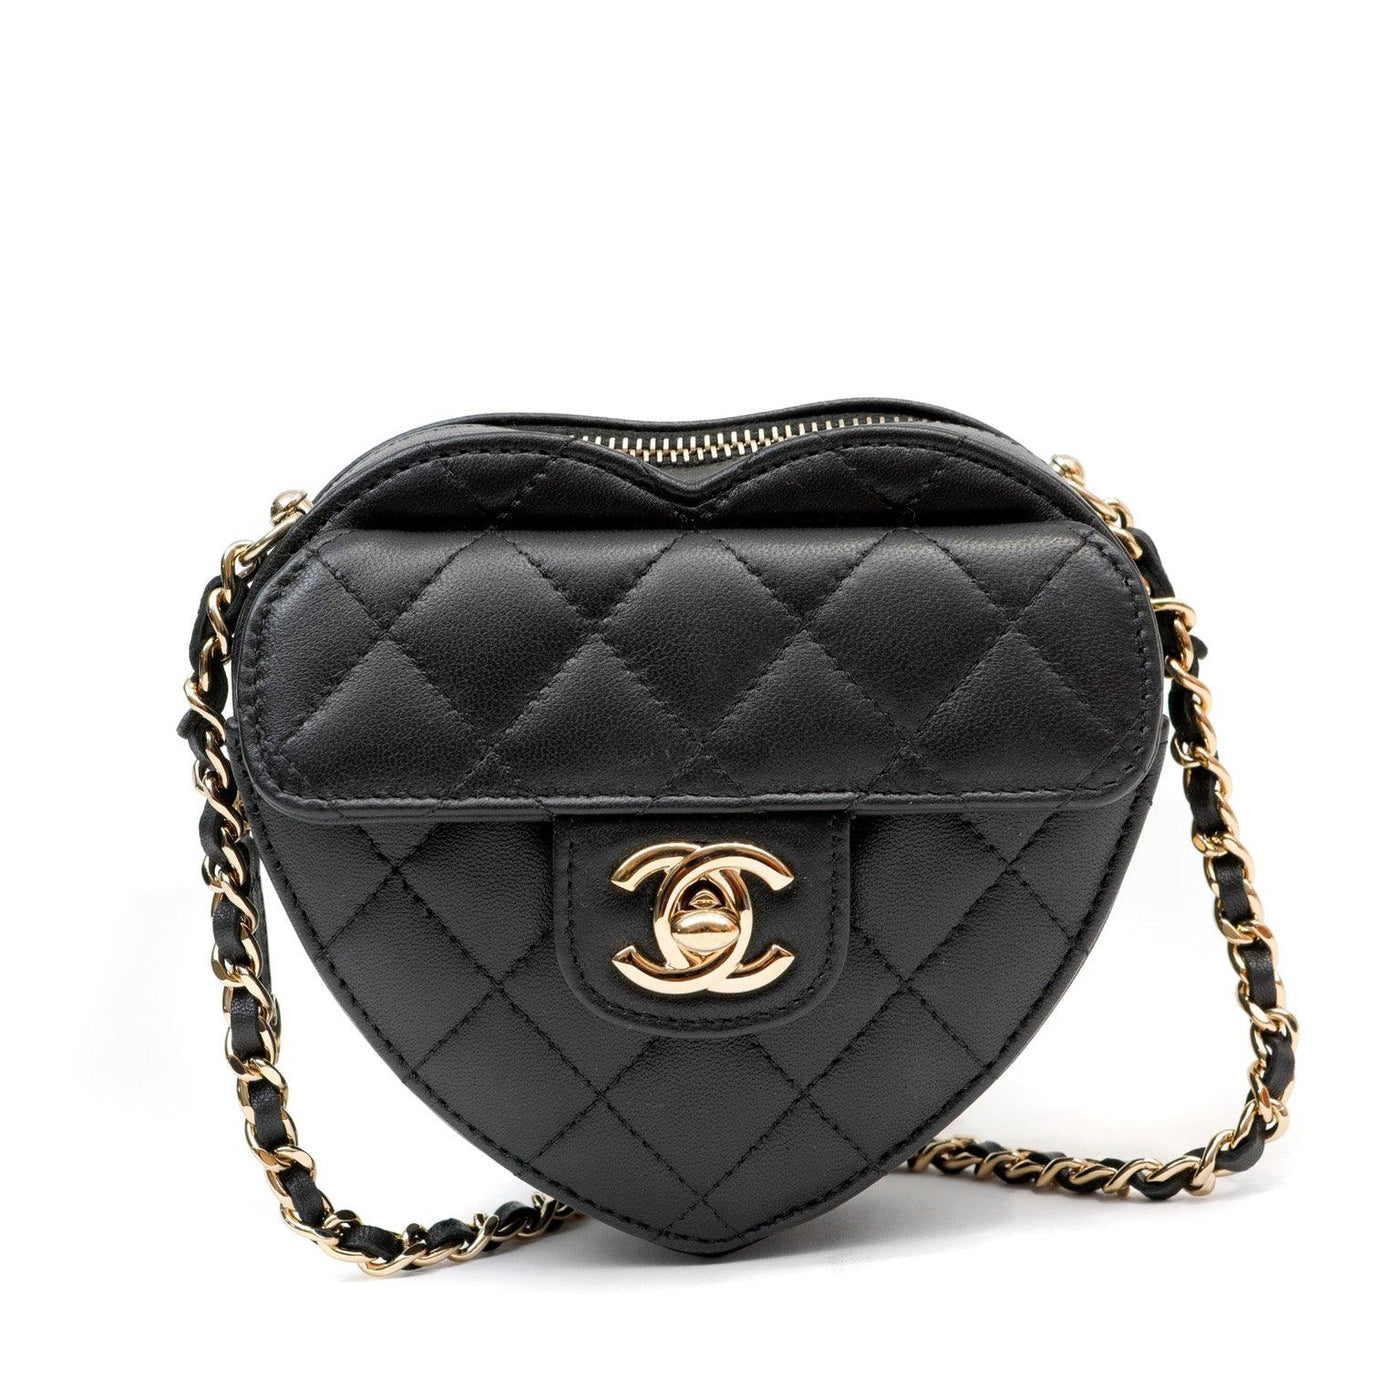 Chanel Black Lambskin Mini Heart Bag - Only Authentics